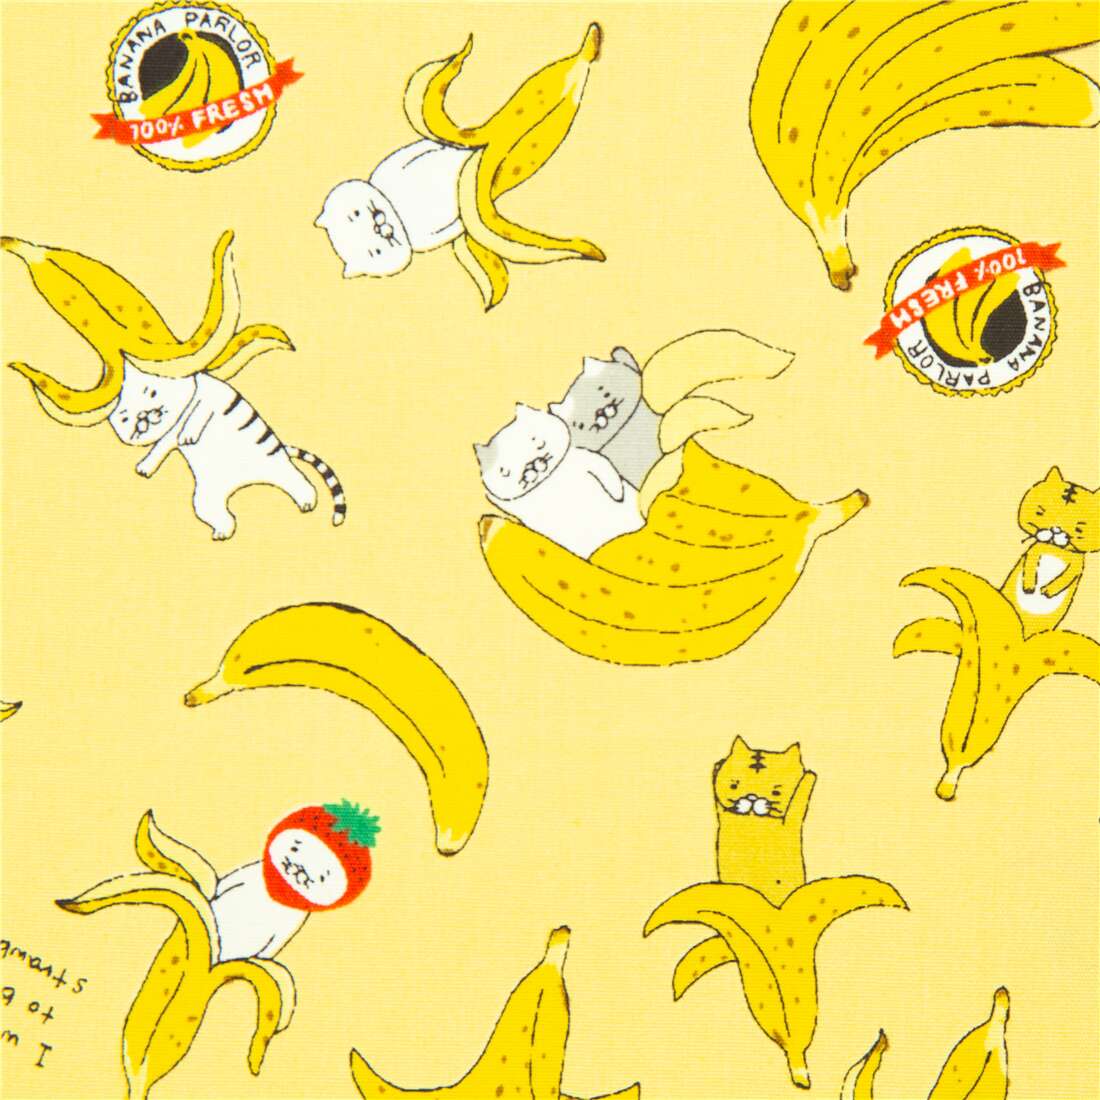 Banana cat!